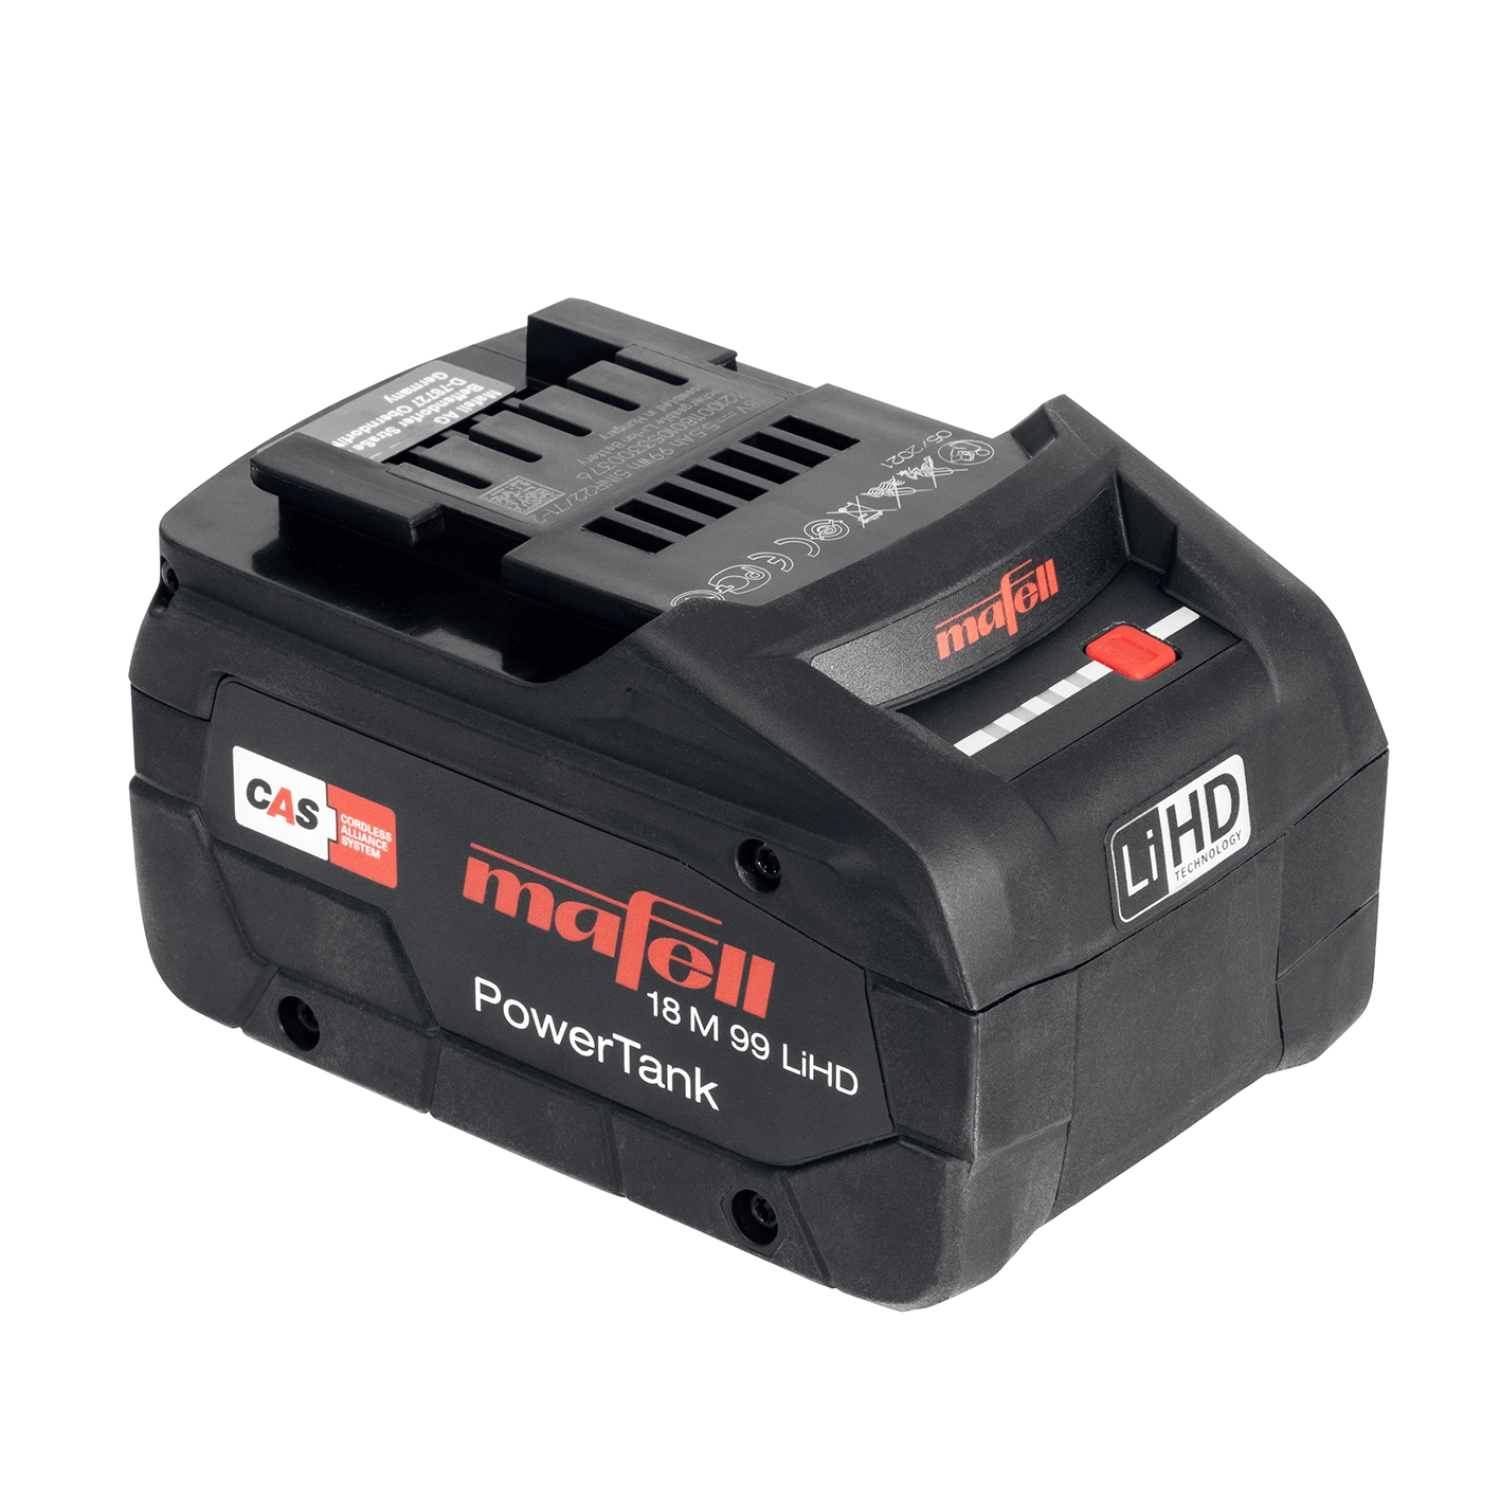 Mafell 18V LiHD batterie PowerTank 18 M 99 - 5.5 Ah